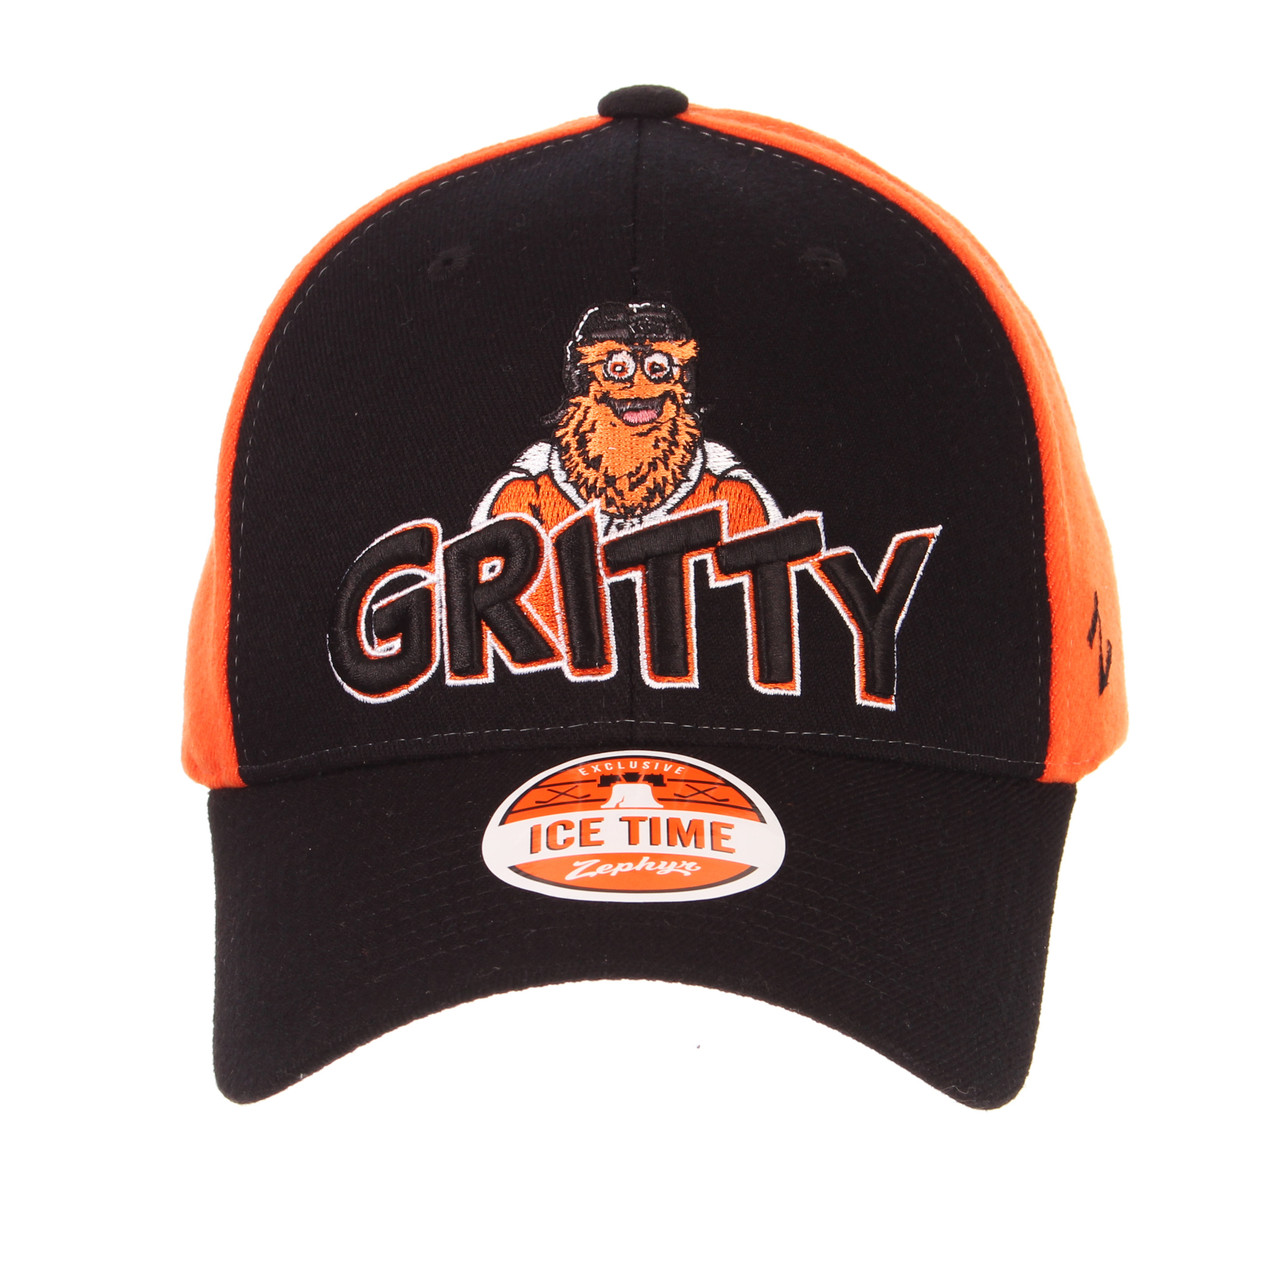 Men's Fanatics Branded Gray Philadelphia Flyers Authentic Pro Home Ice Flex Hat